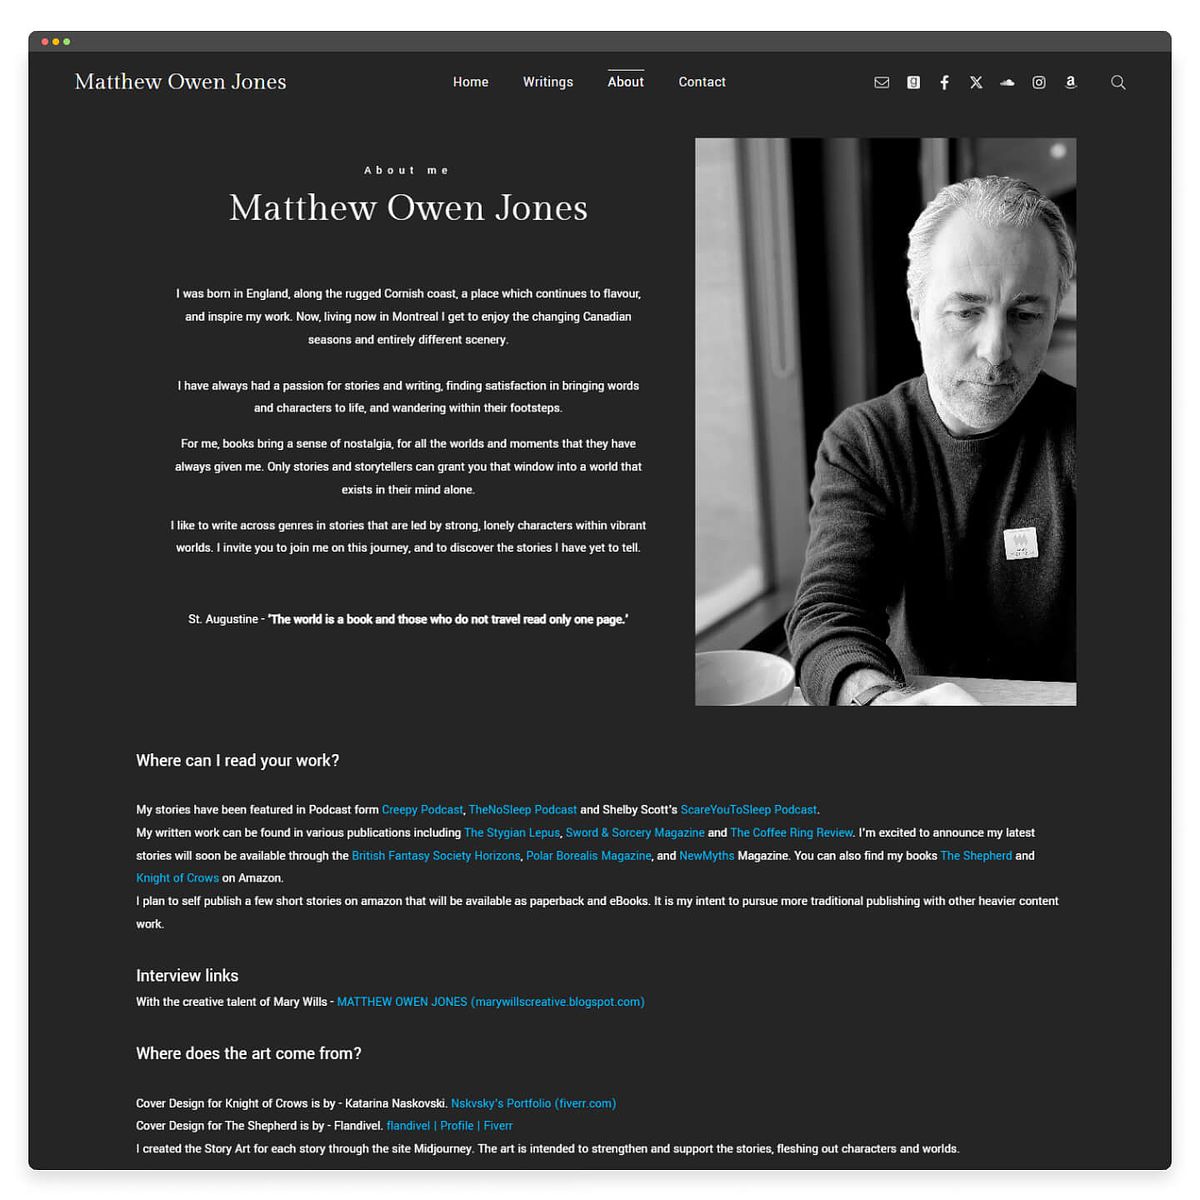 Página biográfica do autor de Mathew Owen Jones